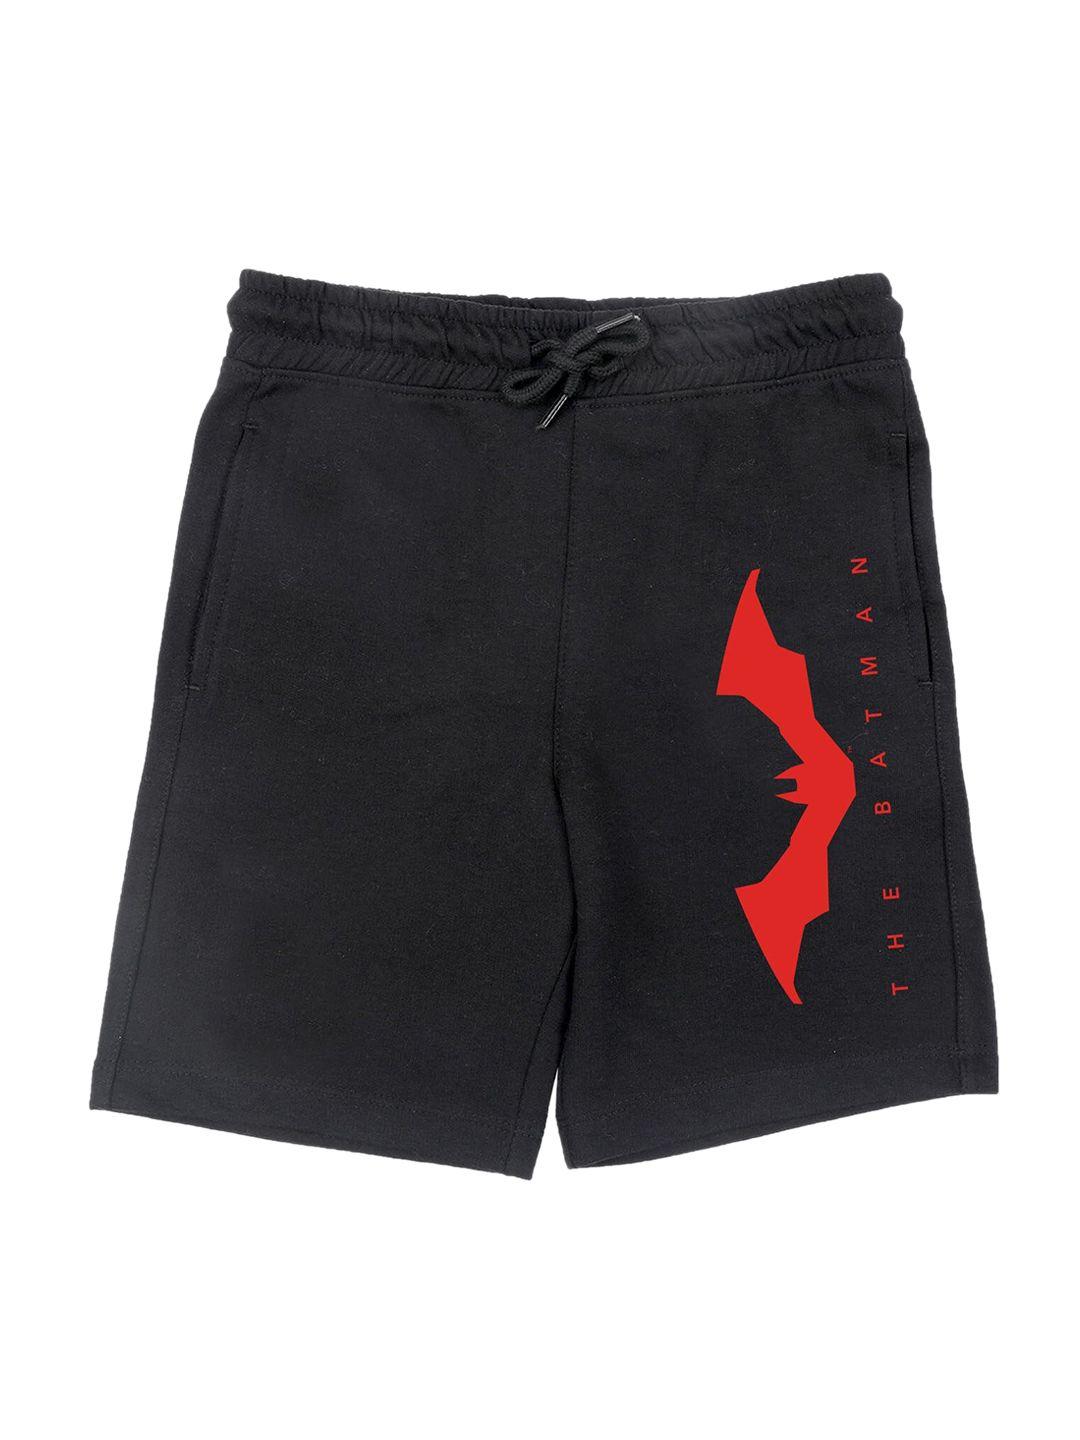 dc by wear your mind boys black & red batman print shorts